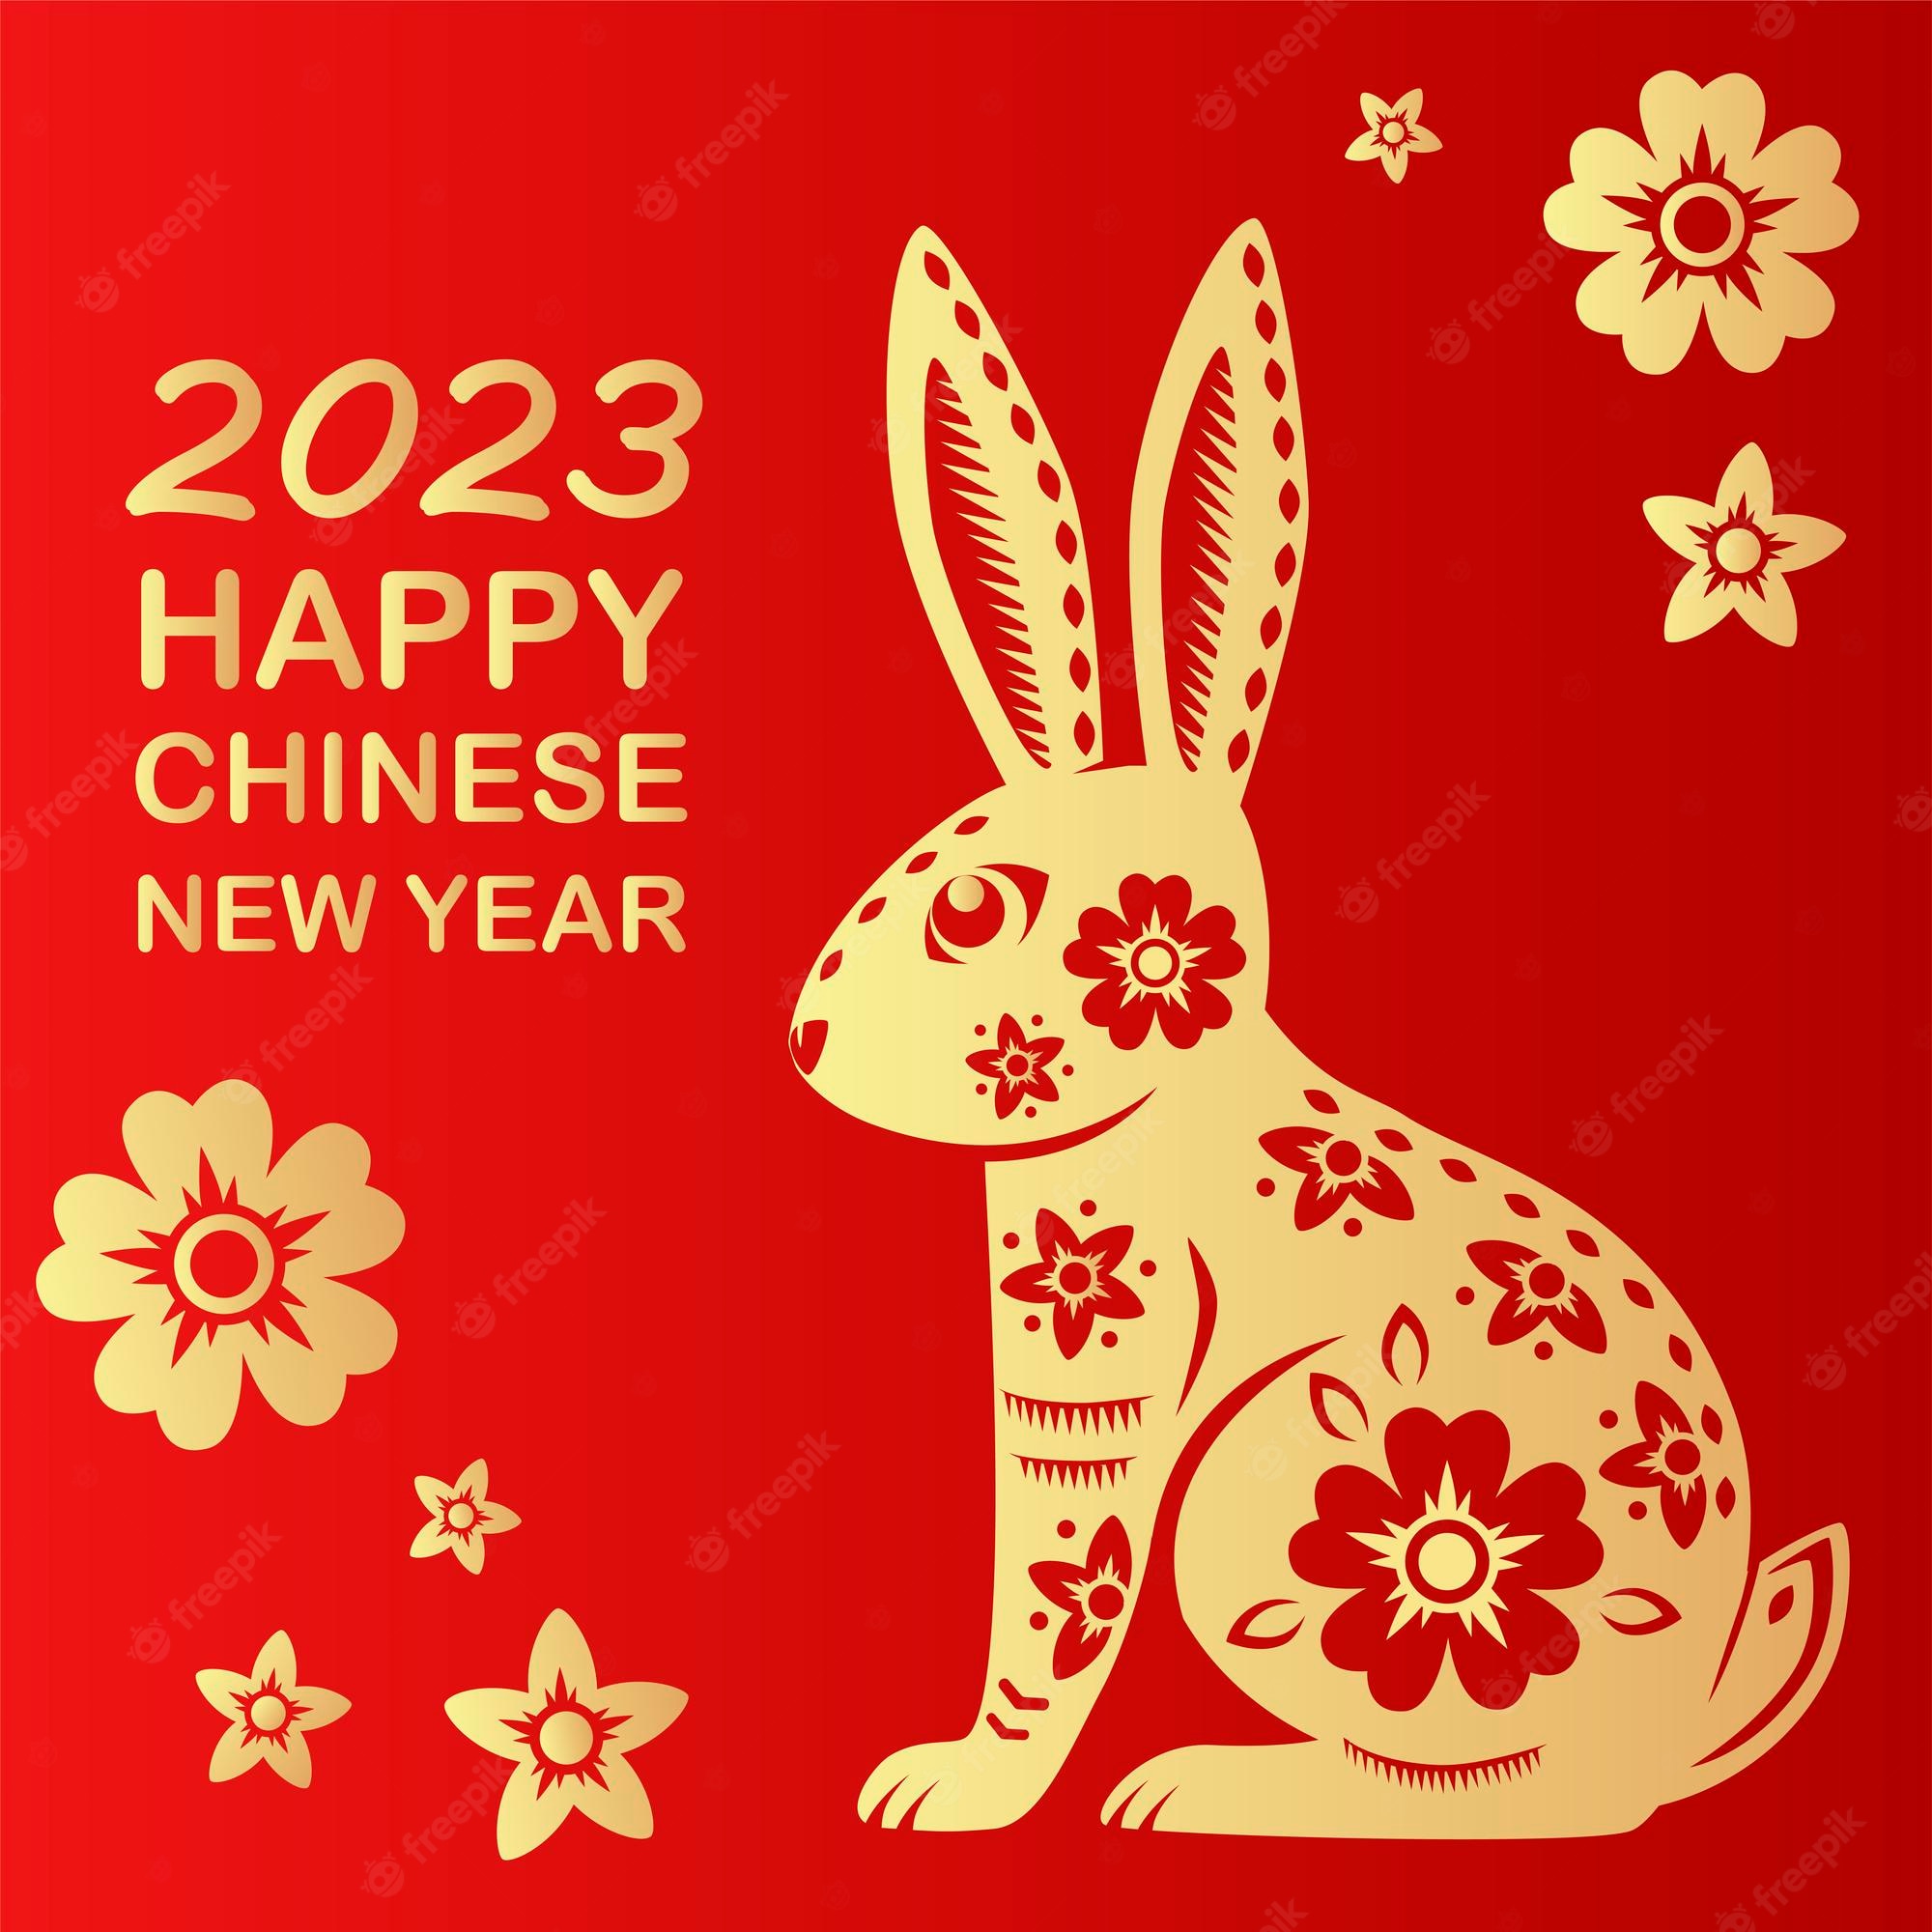 Selamat Tahun Baru Cina!